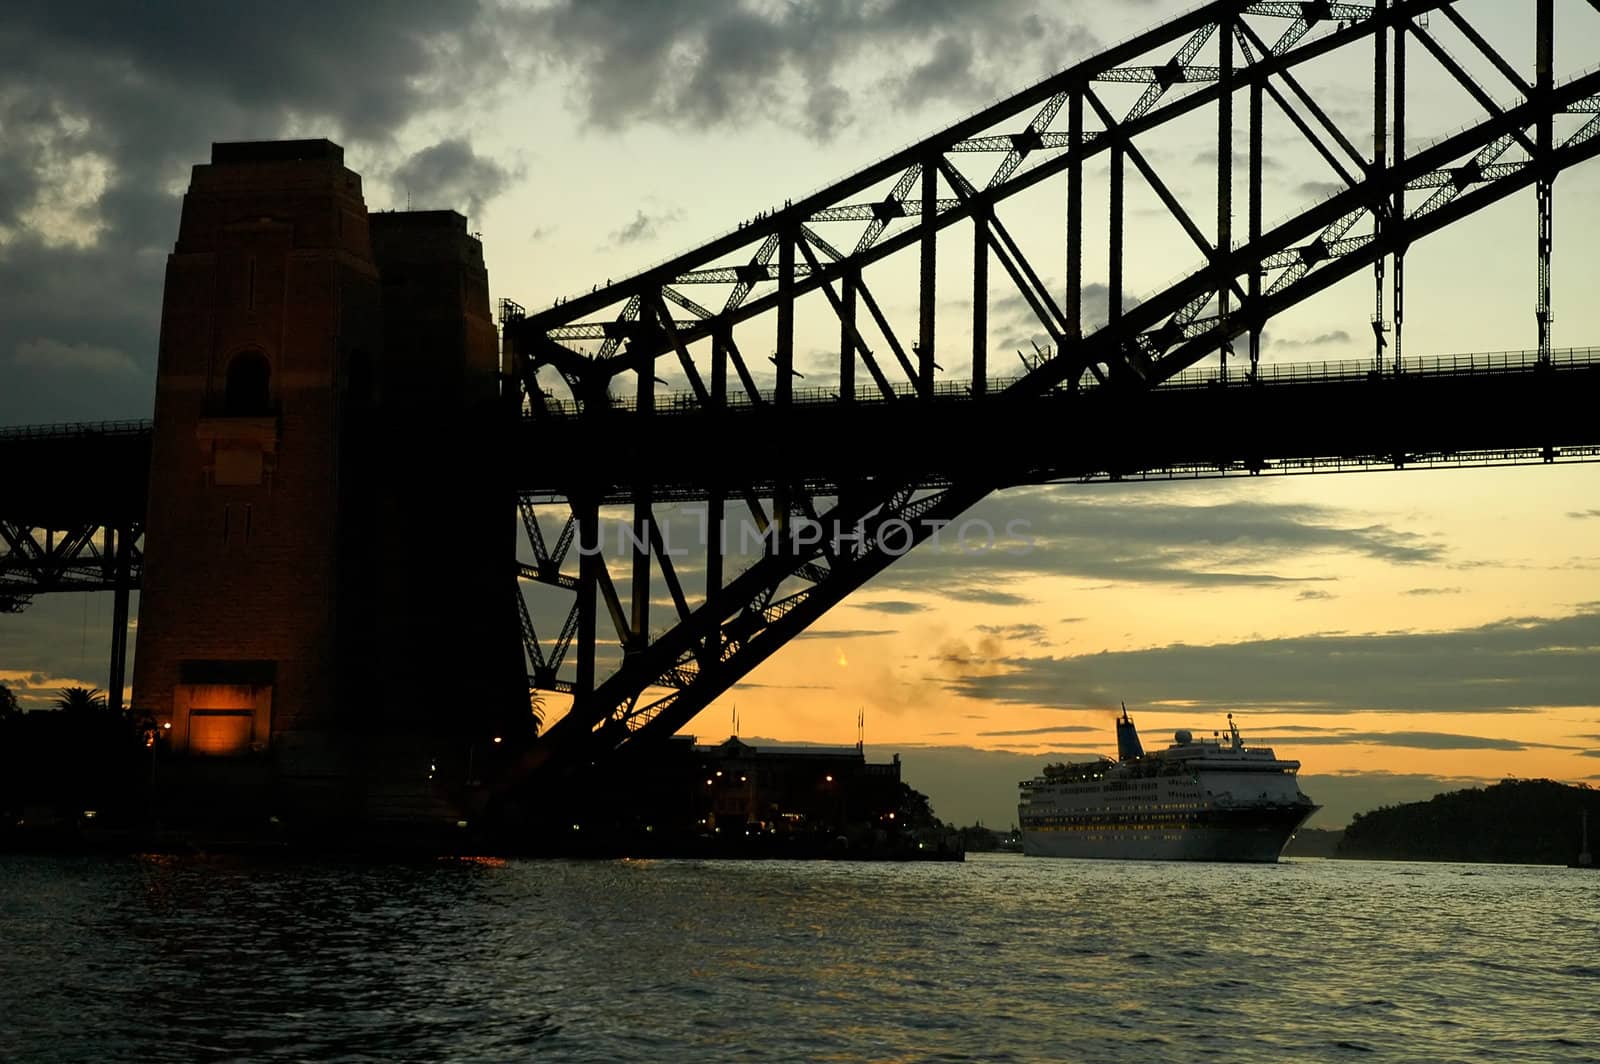 Harbour Bridge evening silhouette, big ship in background